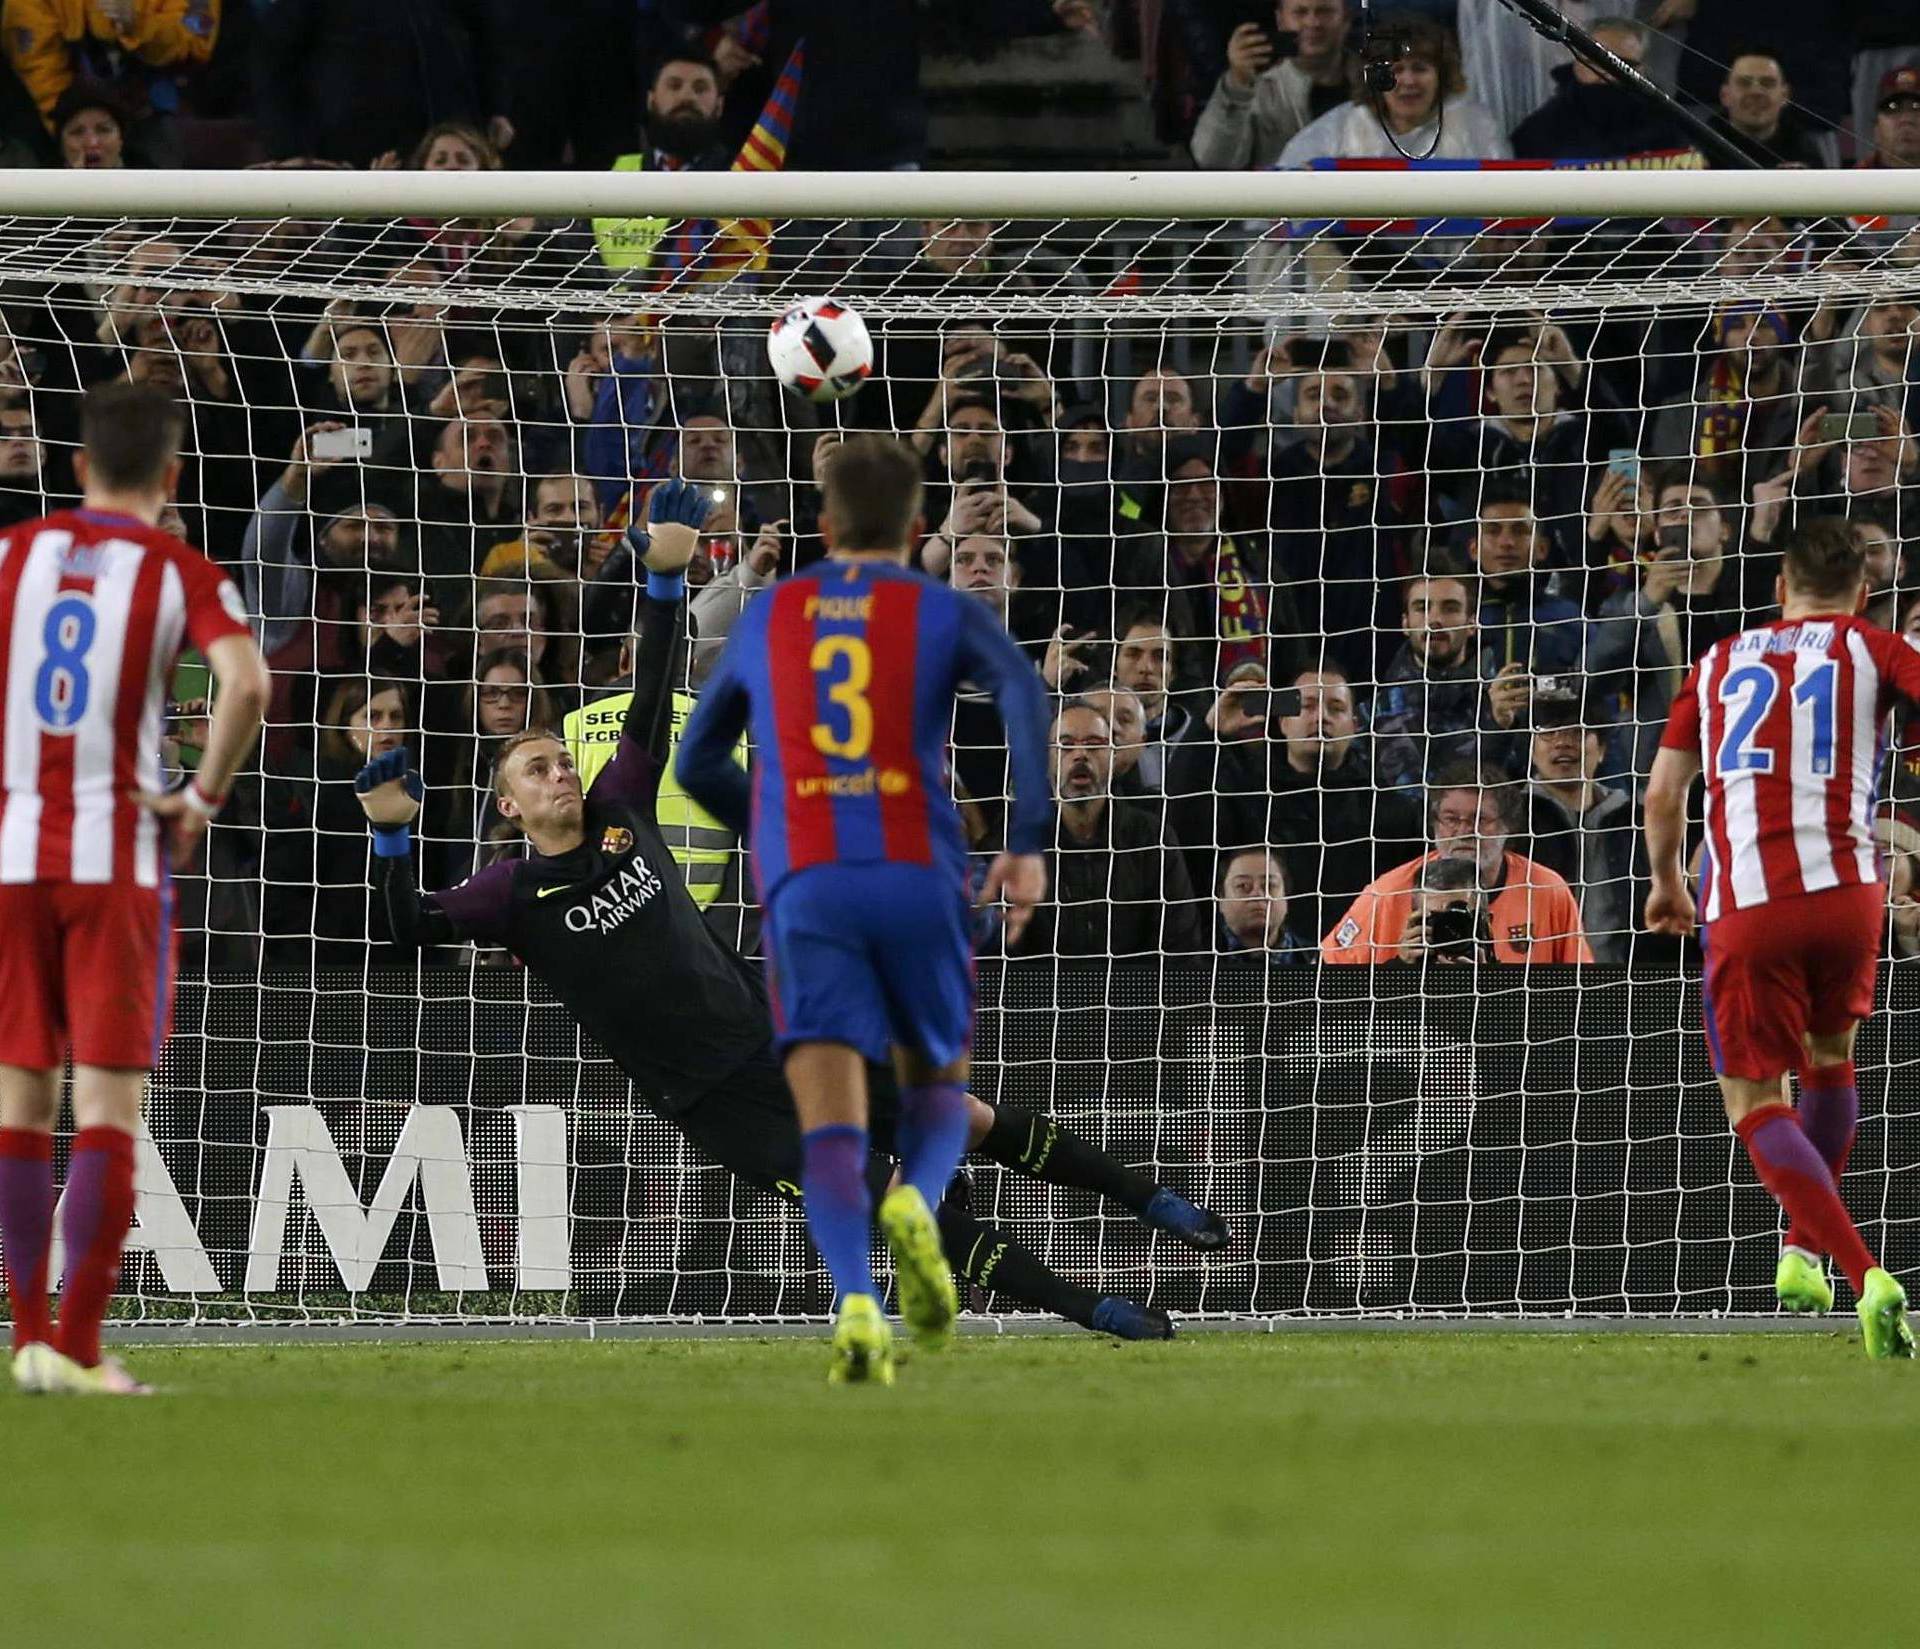 Football Soccer - Barcelona v Atletico Madrid  - Spanish King's Cup Semi-final second leg